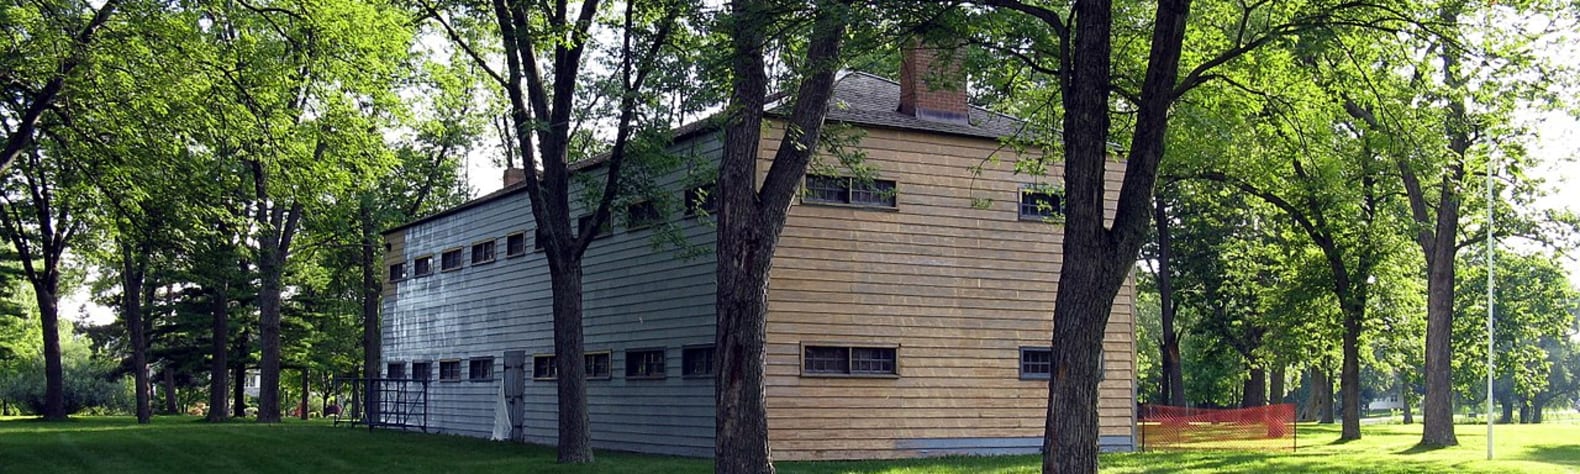 Butler's Barracks National Historic Site